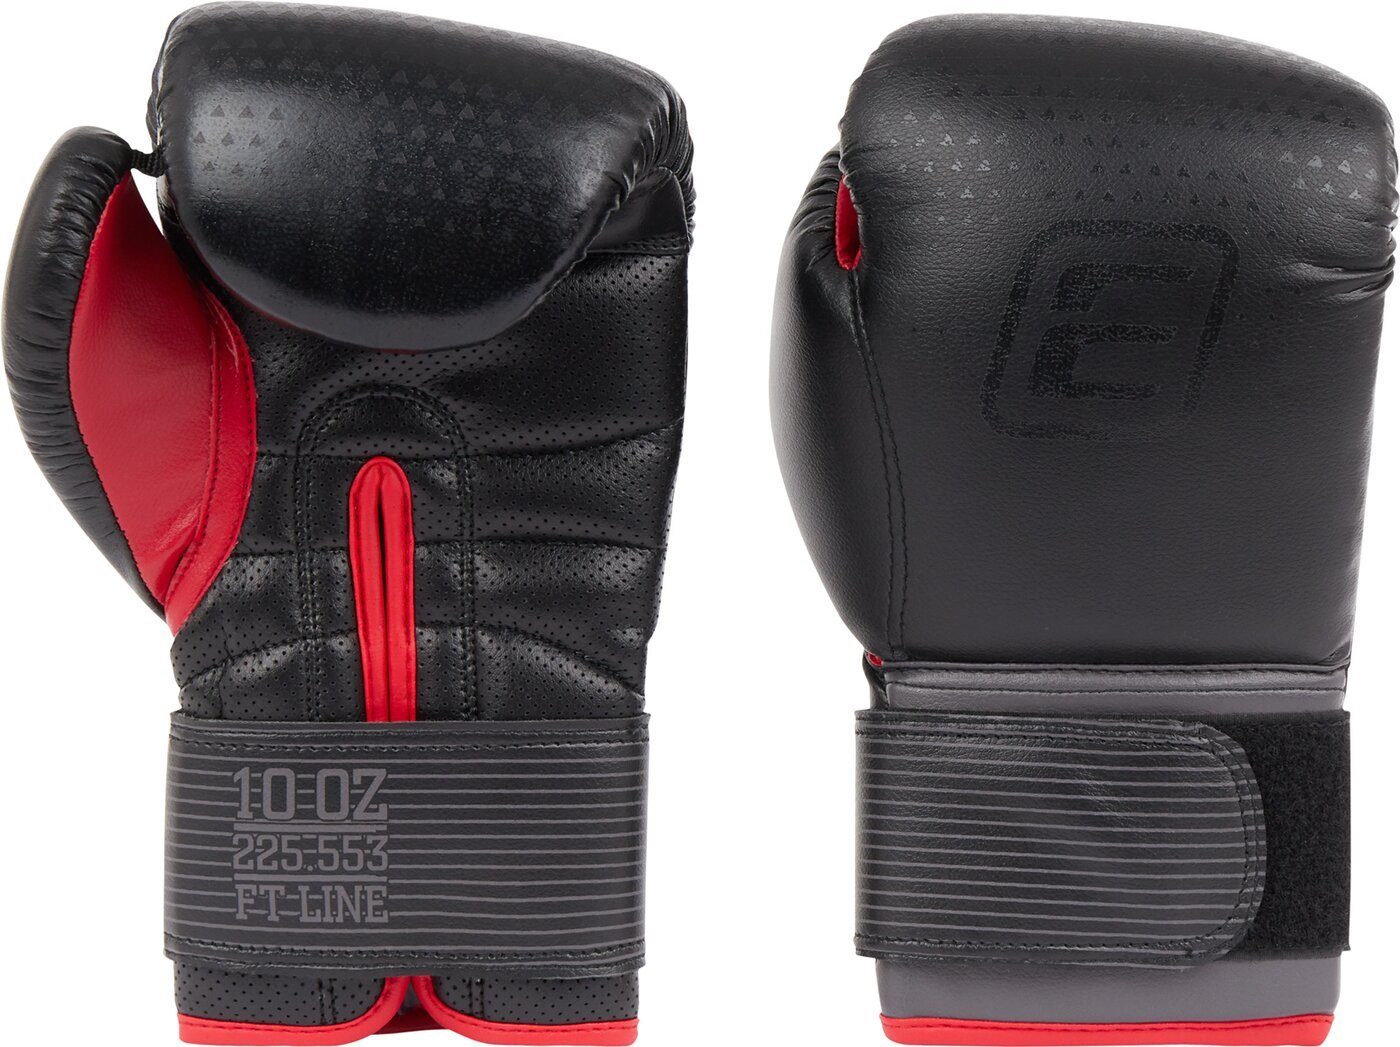 Box-Handschuh BLACK/ RED PU FT GREY/ Energetics Boxhandschuhe